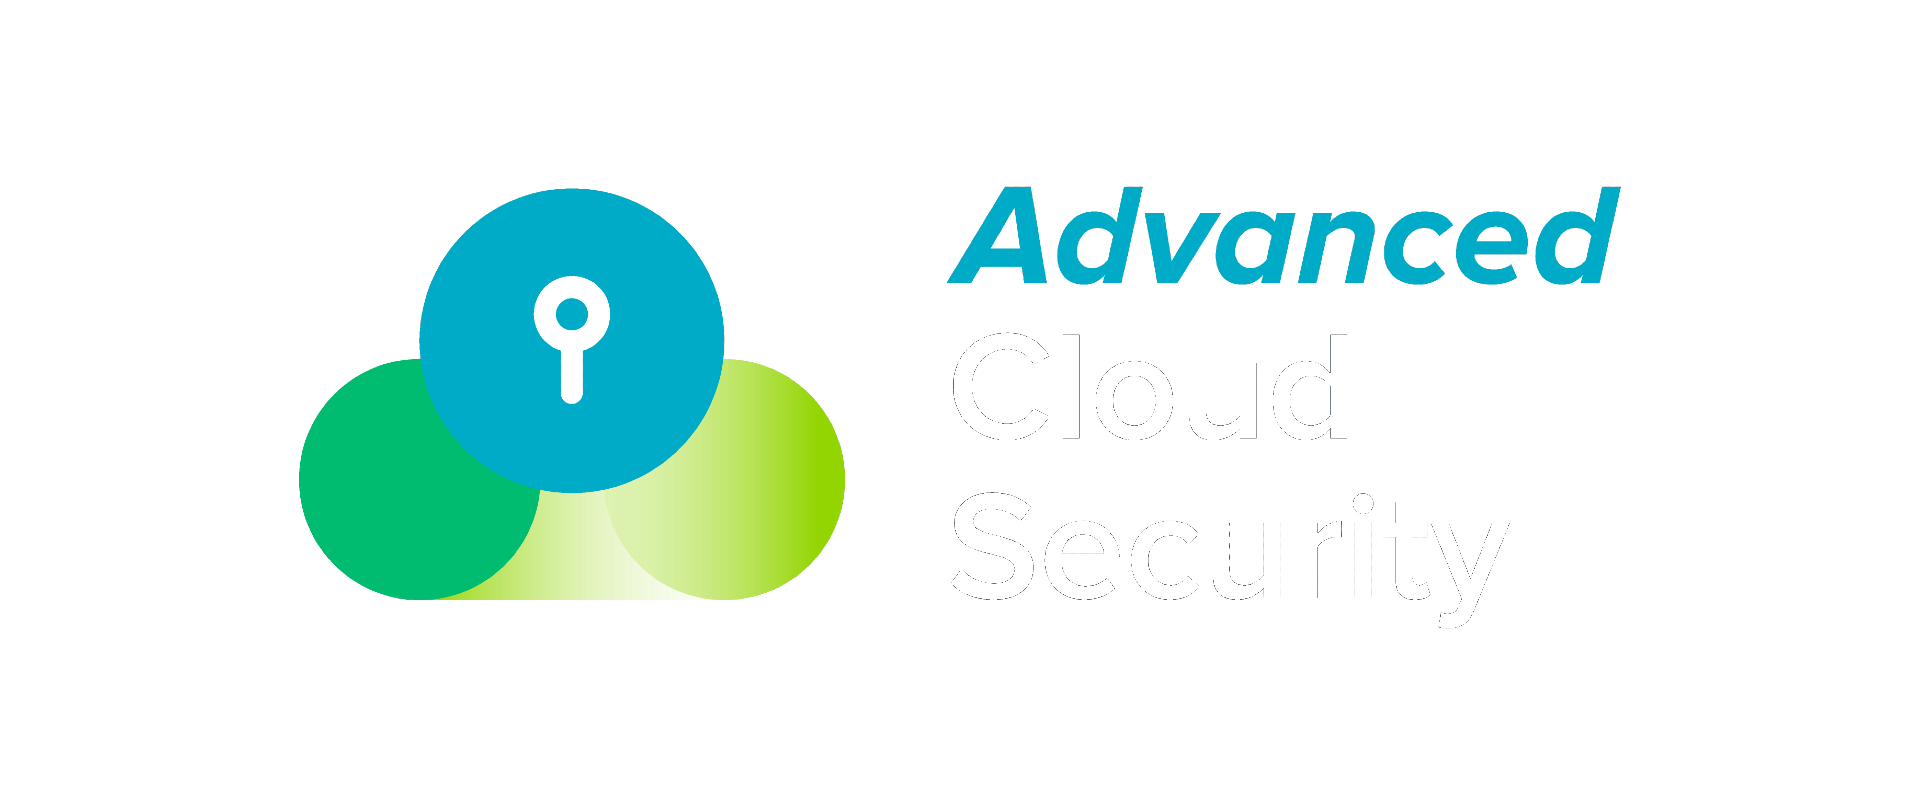 advanced cloud security app by EFOQUS